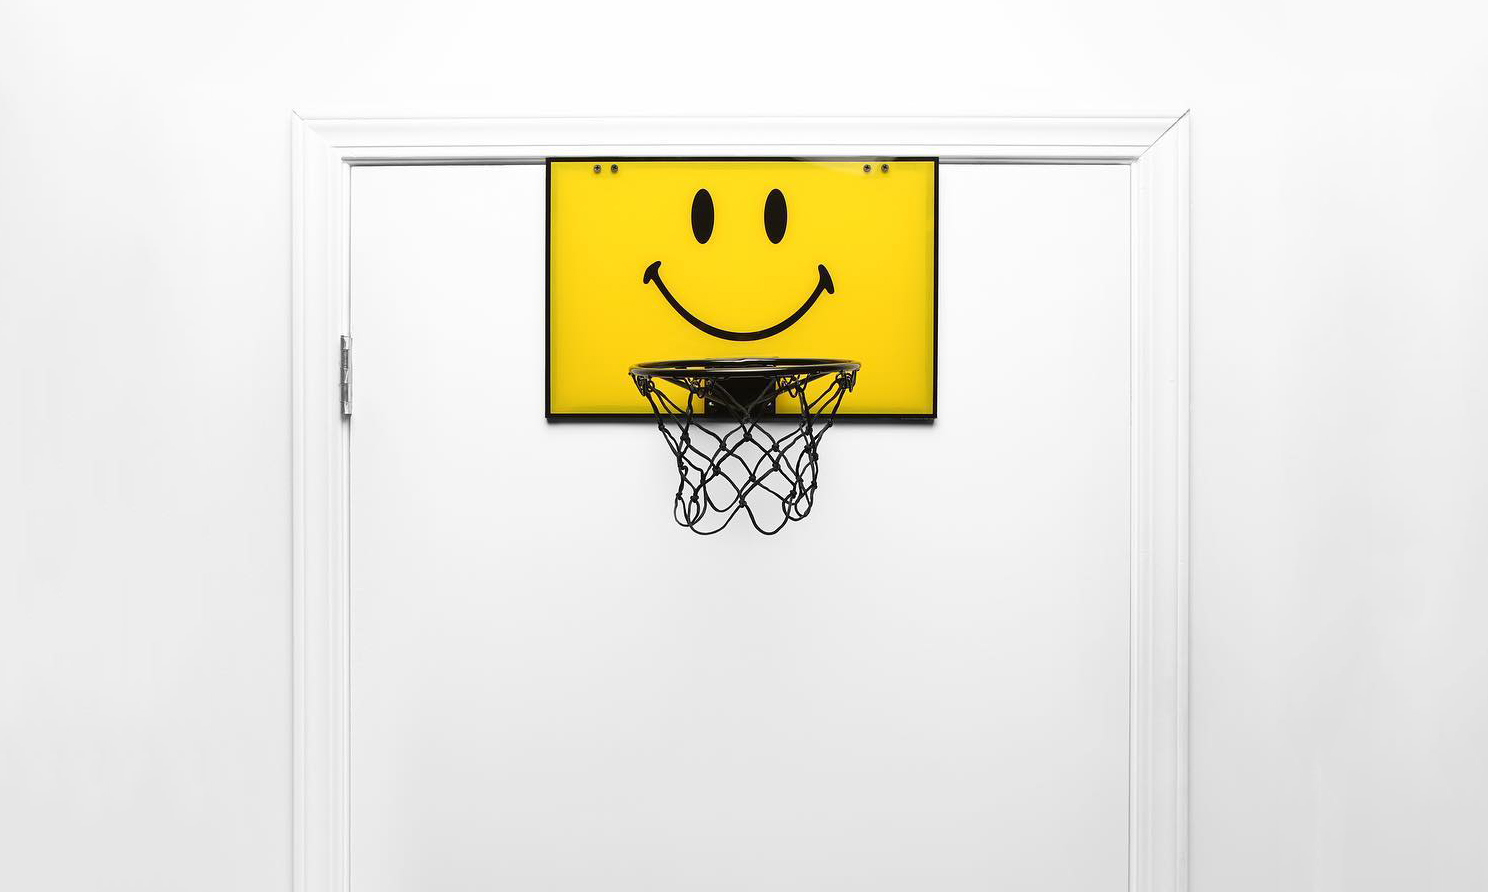 Chinatown Market 推出 “笑脸” 迷你篮球框